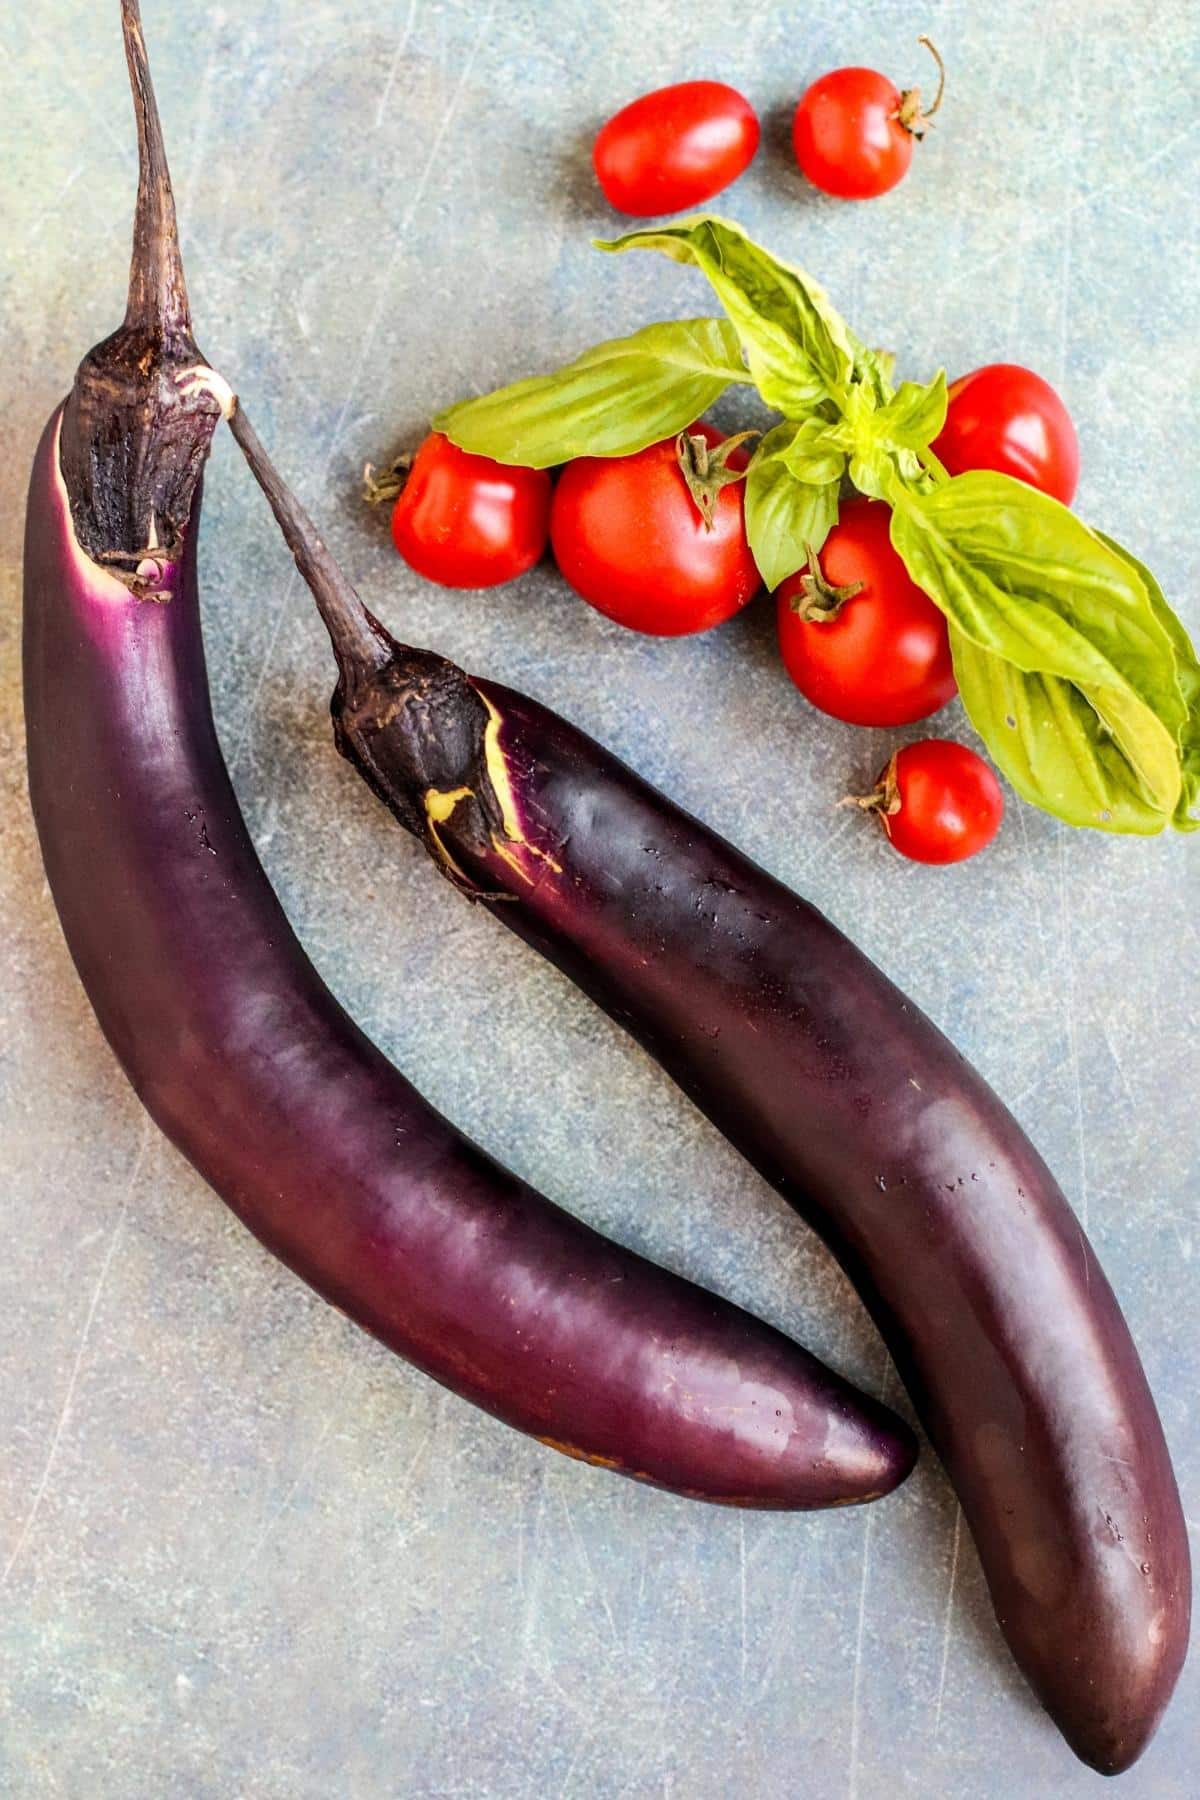 Japanese eggplants, cherry tomatoes, and fresh basil.